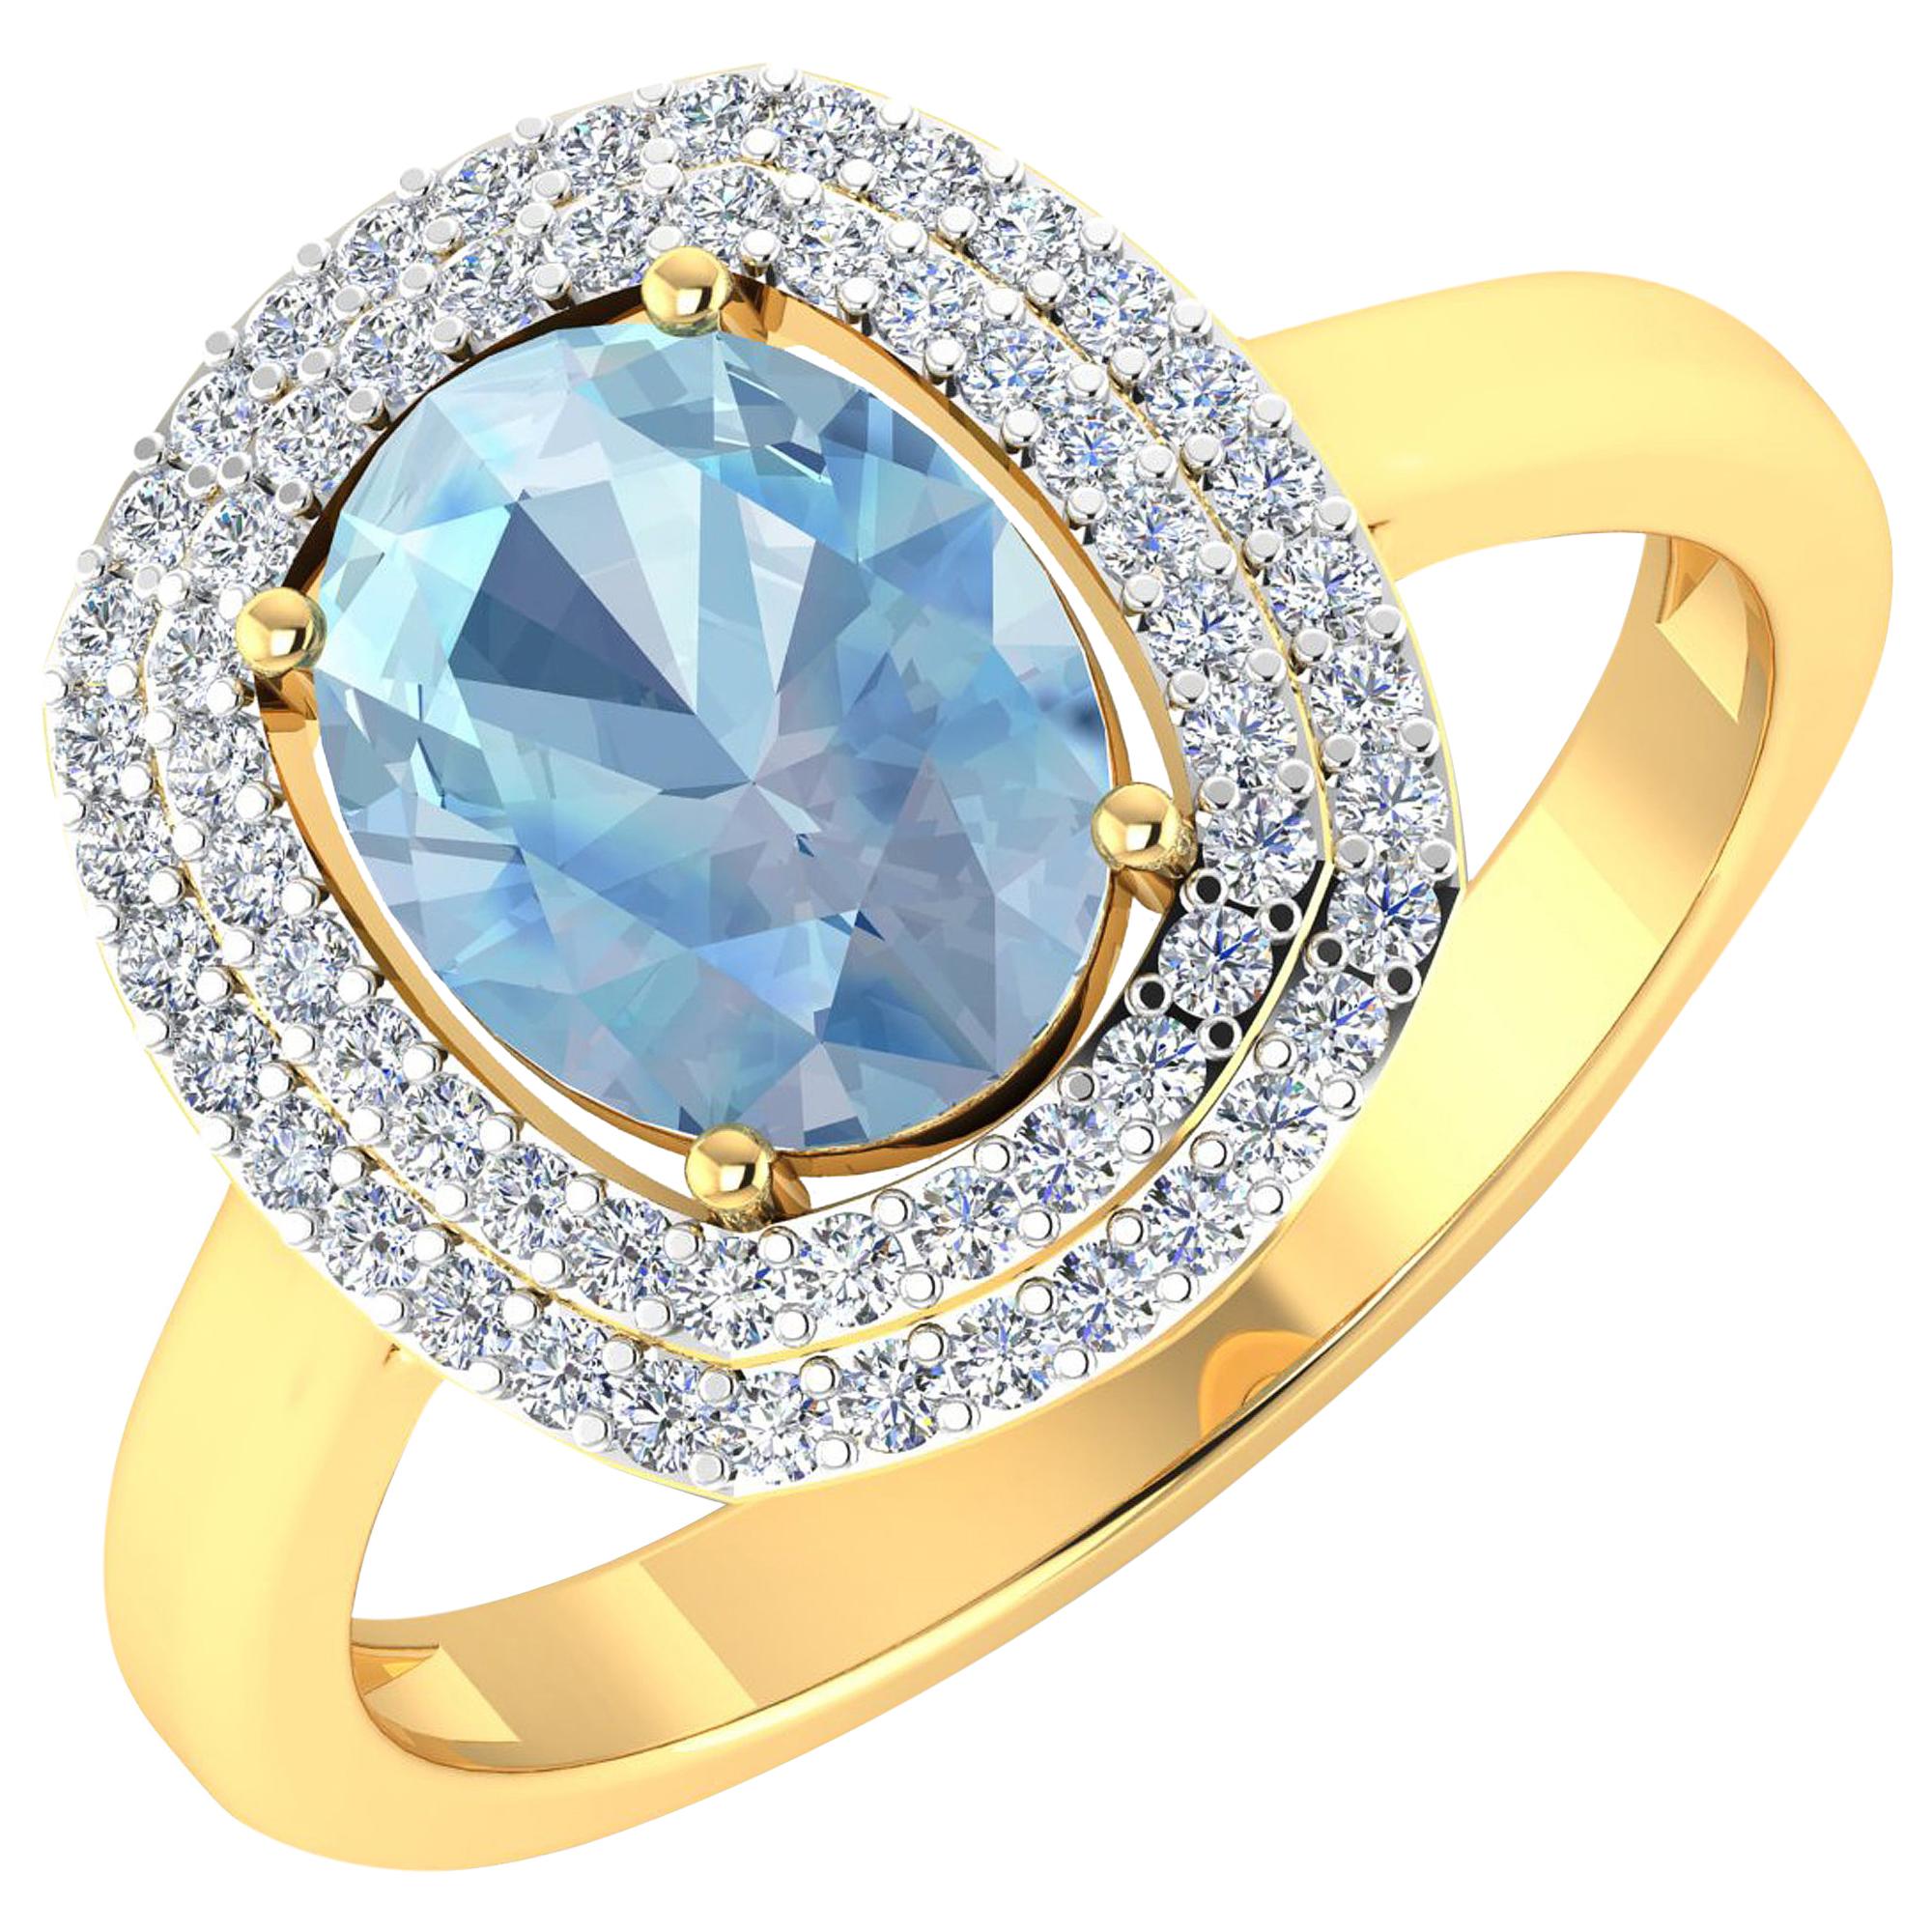 Aquamarine Gold Ring, 14 Karat Gold Aquamarine and Diamond Ring, 1.68 Carat For Sale